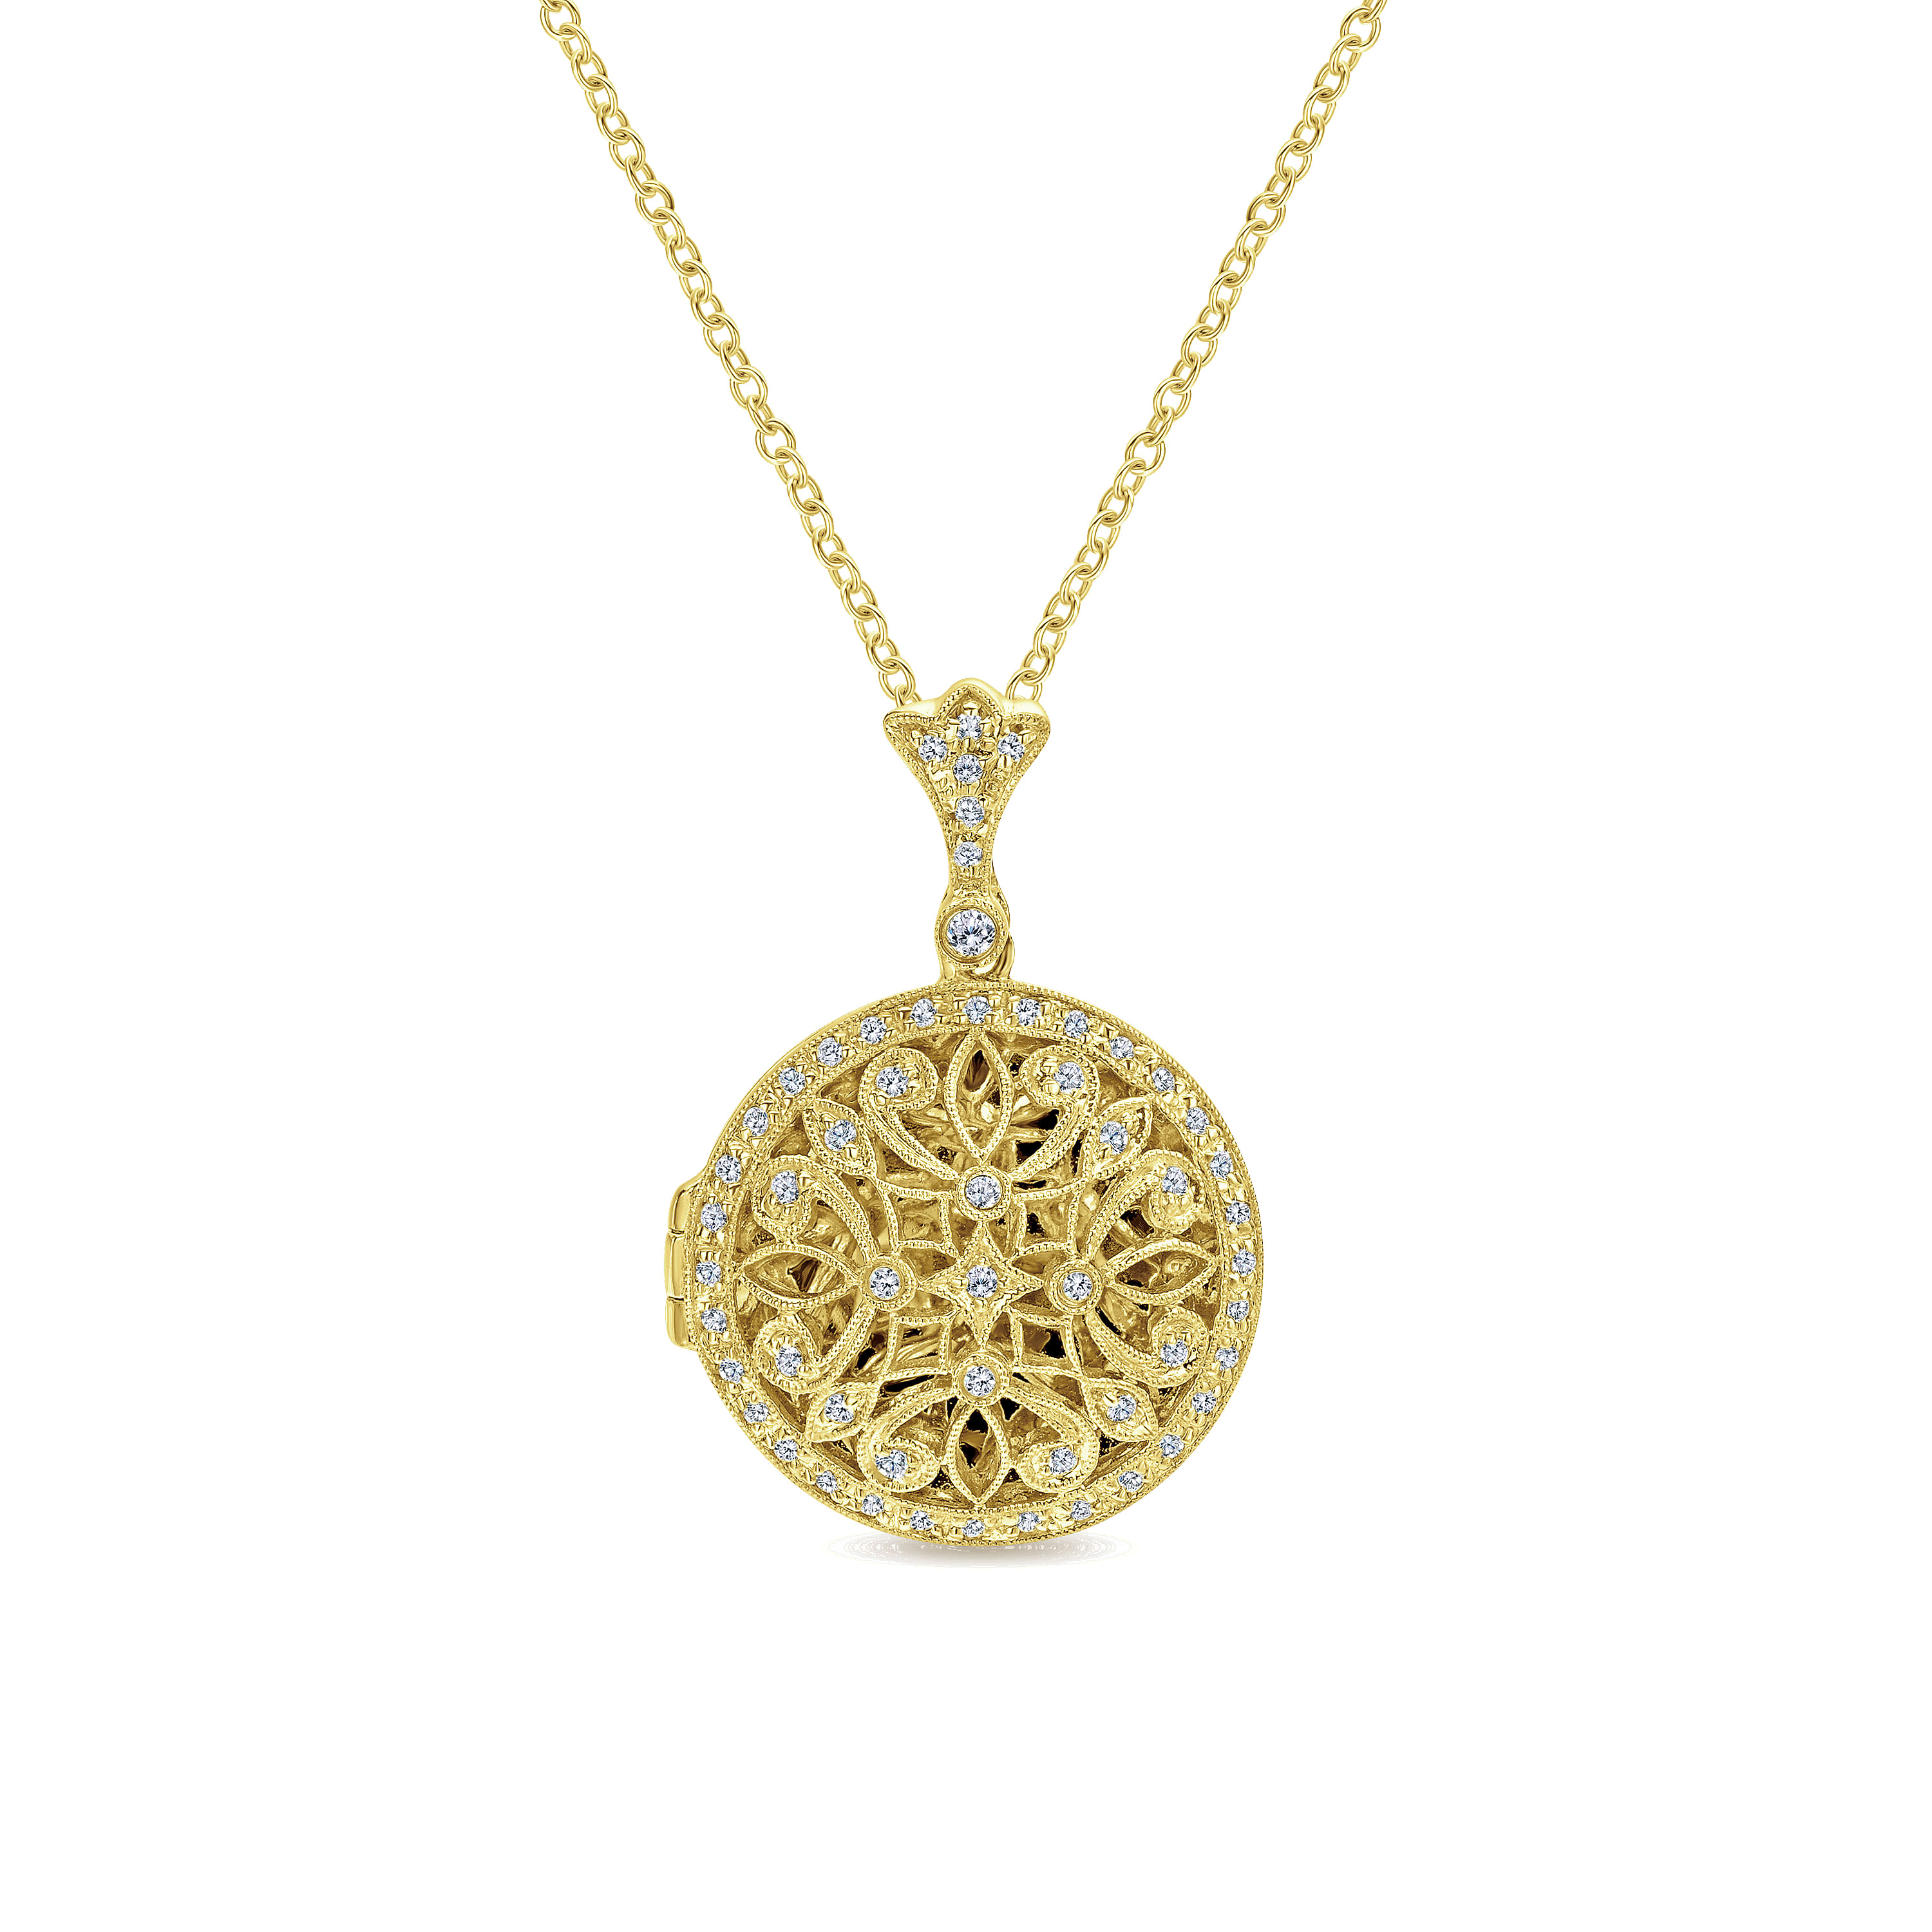 24 inch Vintage Inspired 14K Yellow Gold Filigree Diamond Locket Necklace